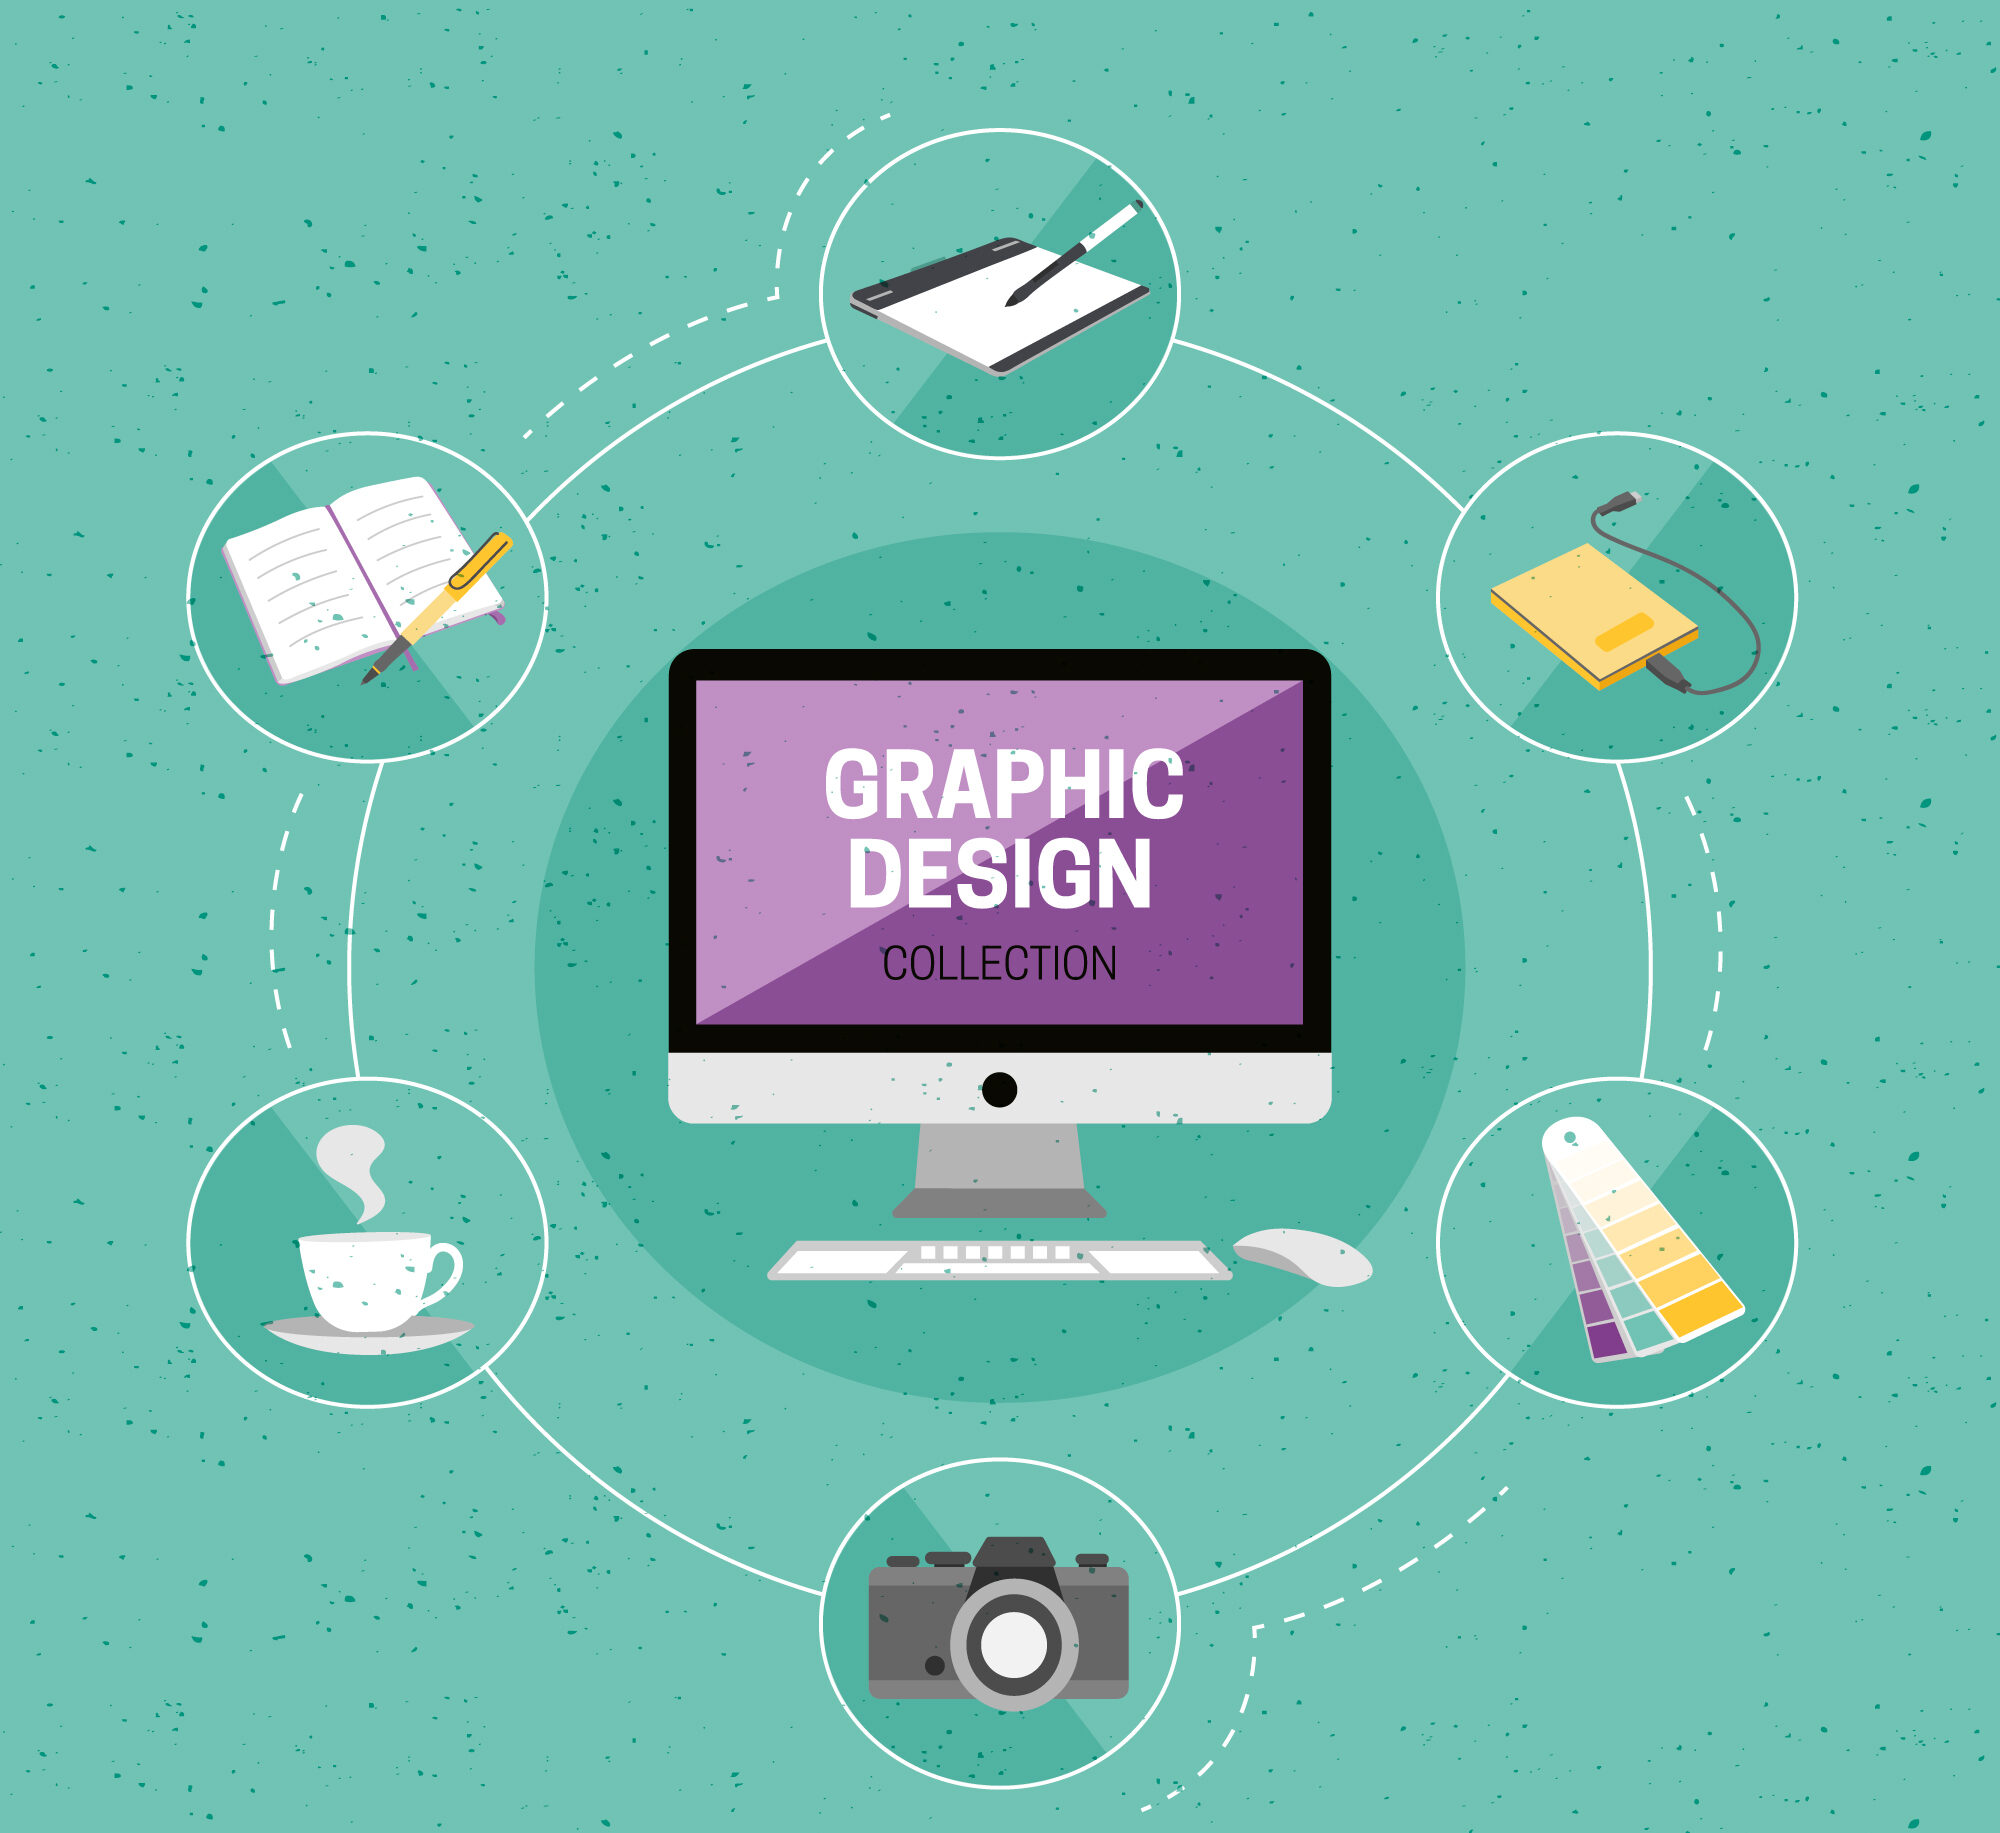 https://tagxa.com/courses/graphic-designing/